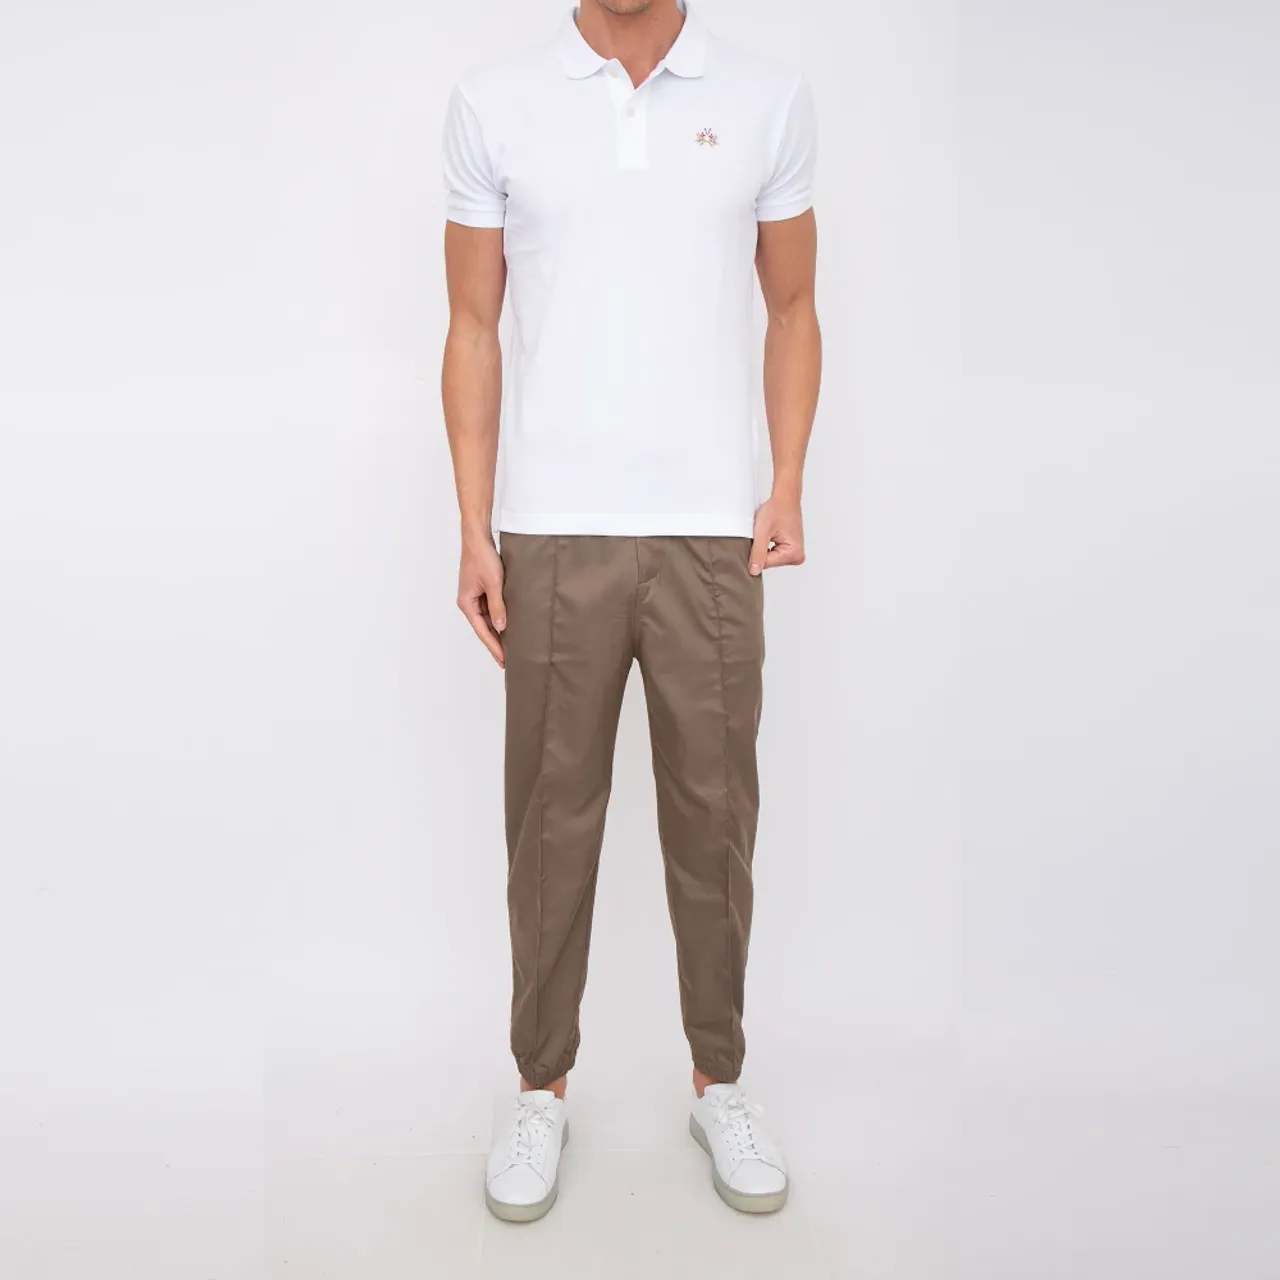 Emporio Armani , Comfortable and Stylish Pantaloni Fango Joggers ,Brown male, Sizes: